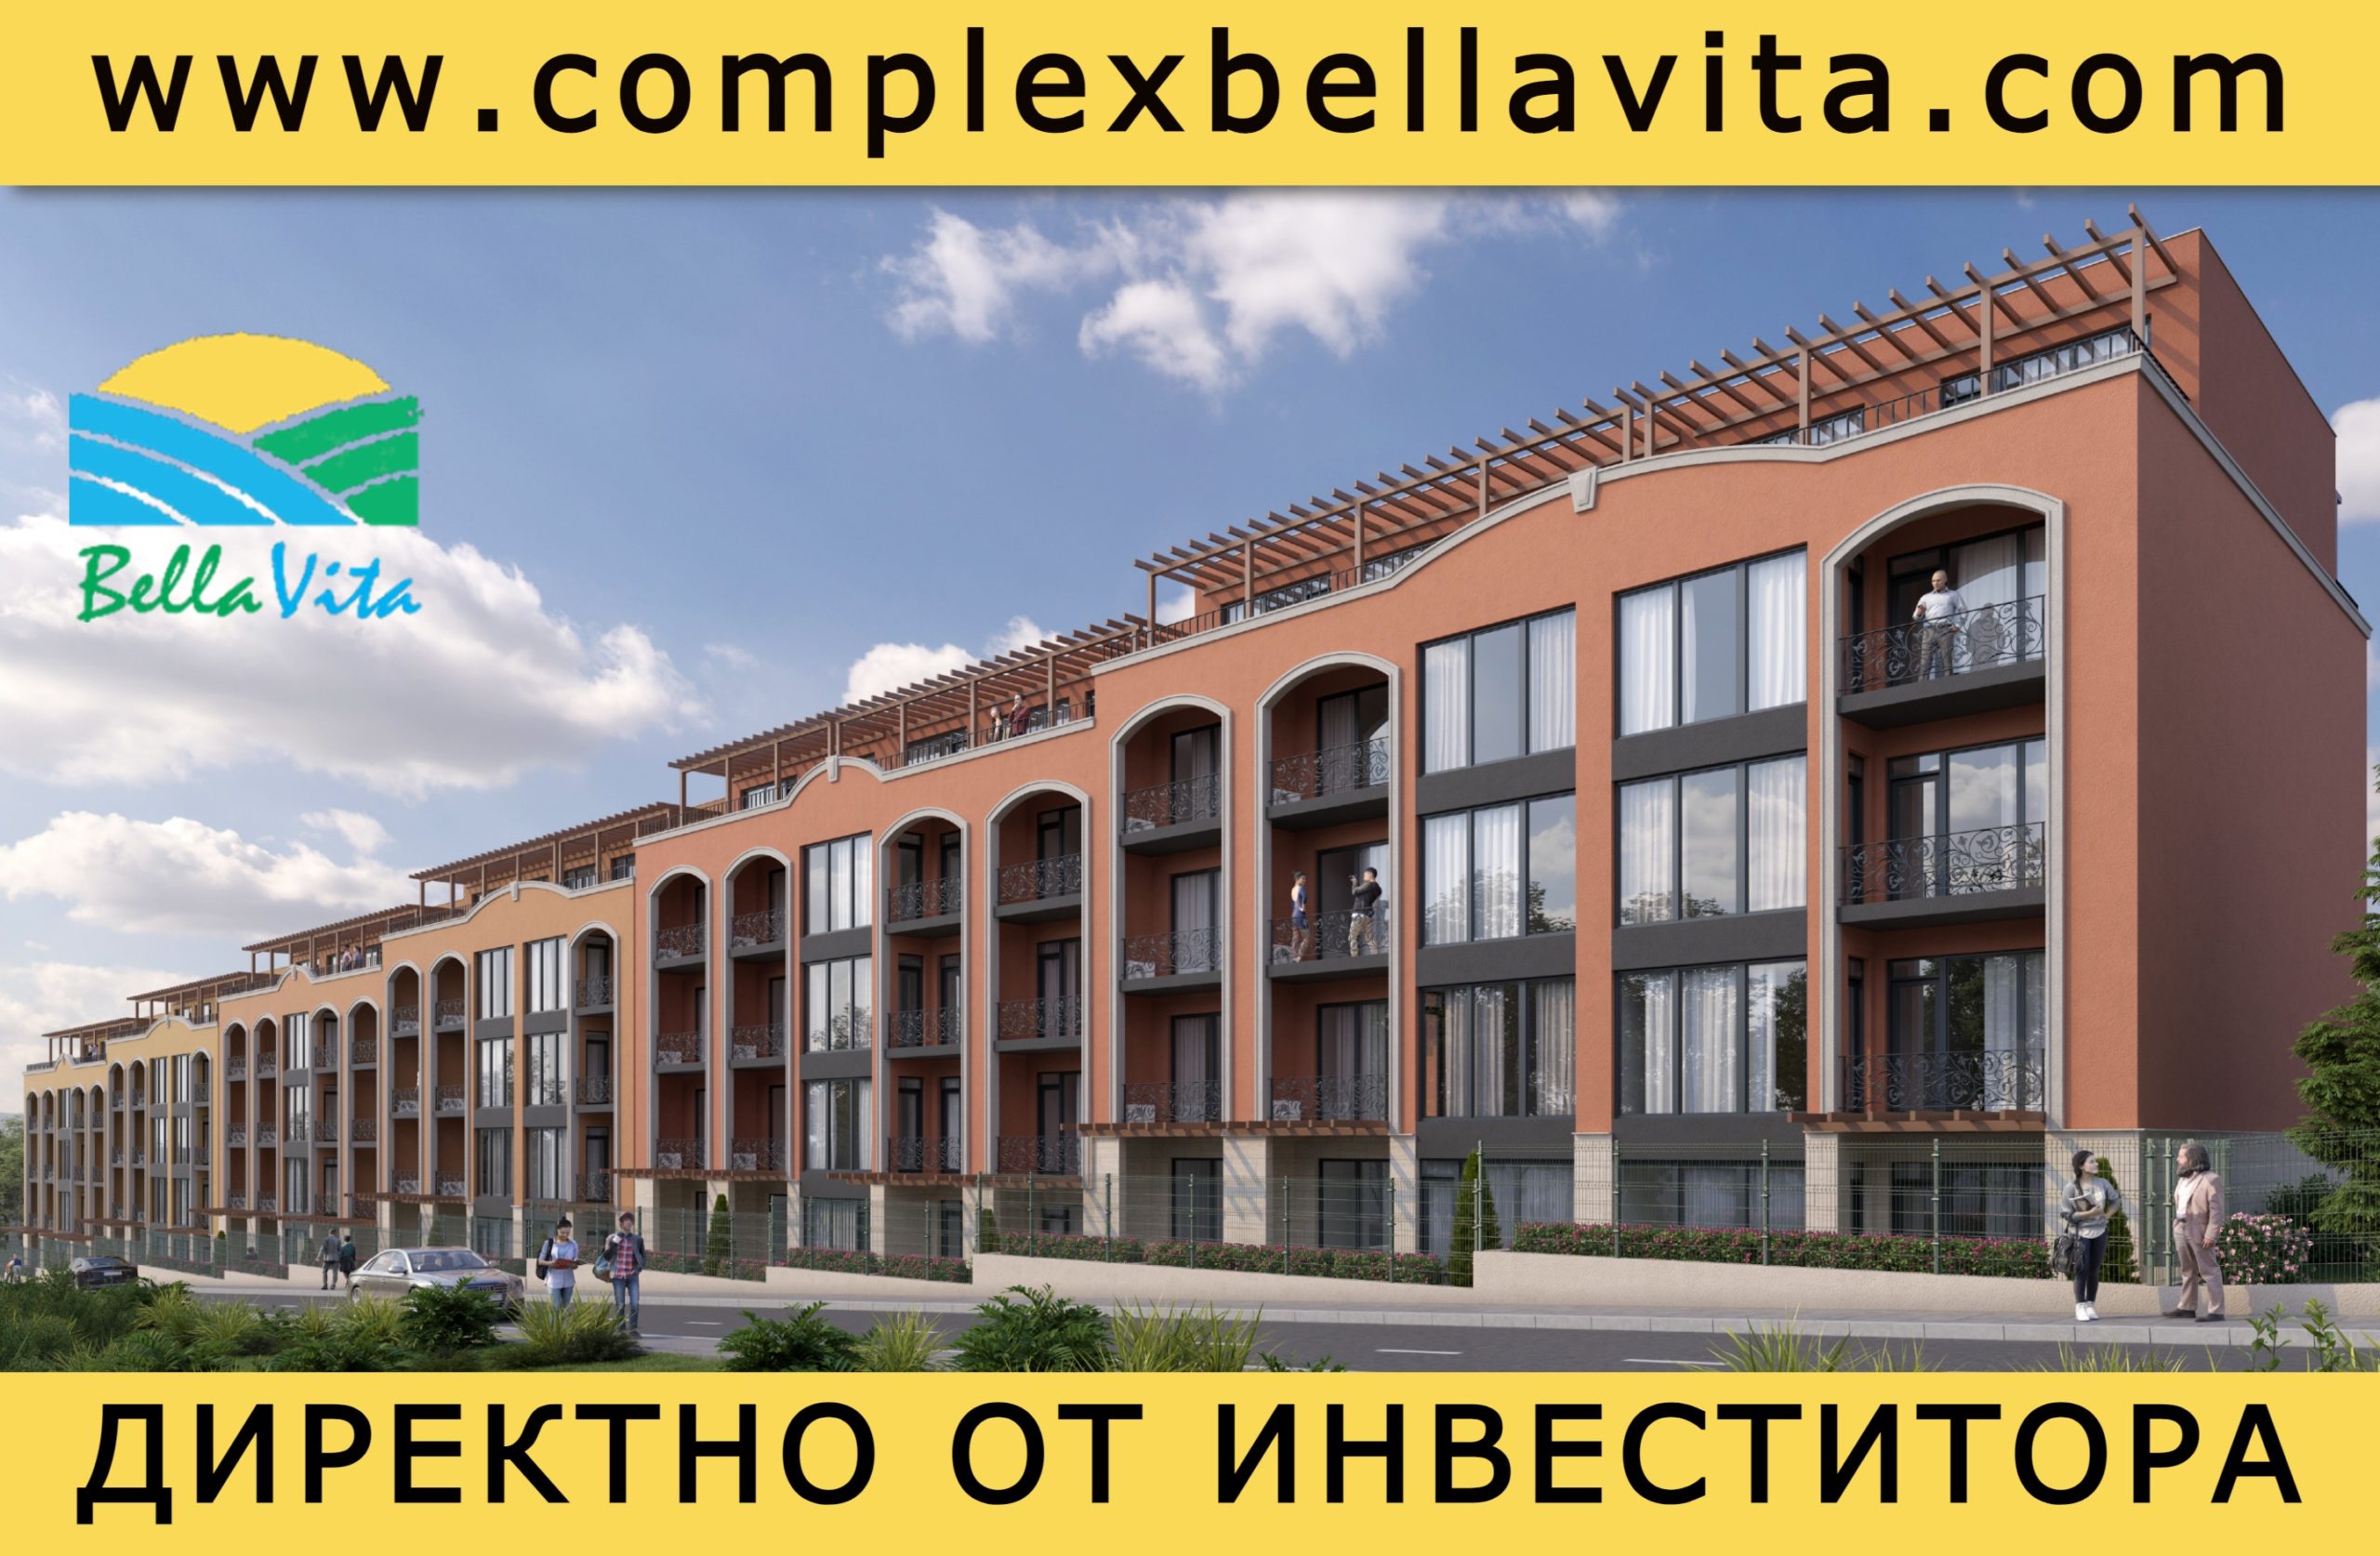 Bella Vita - Апартаменти на морето!